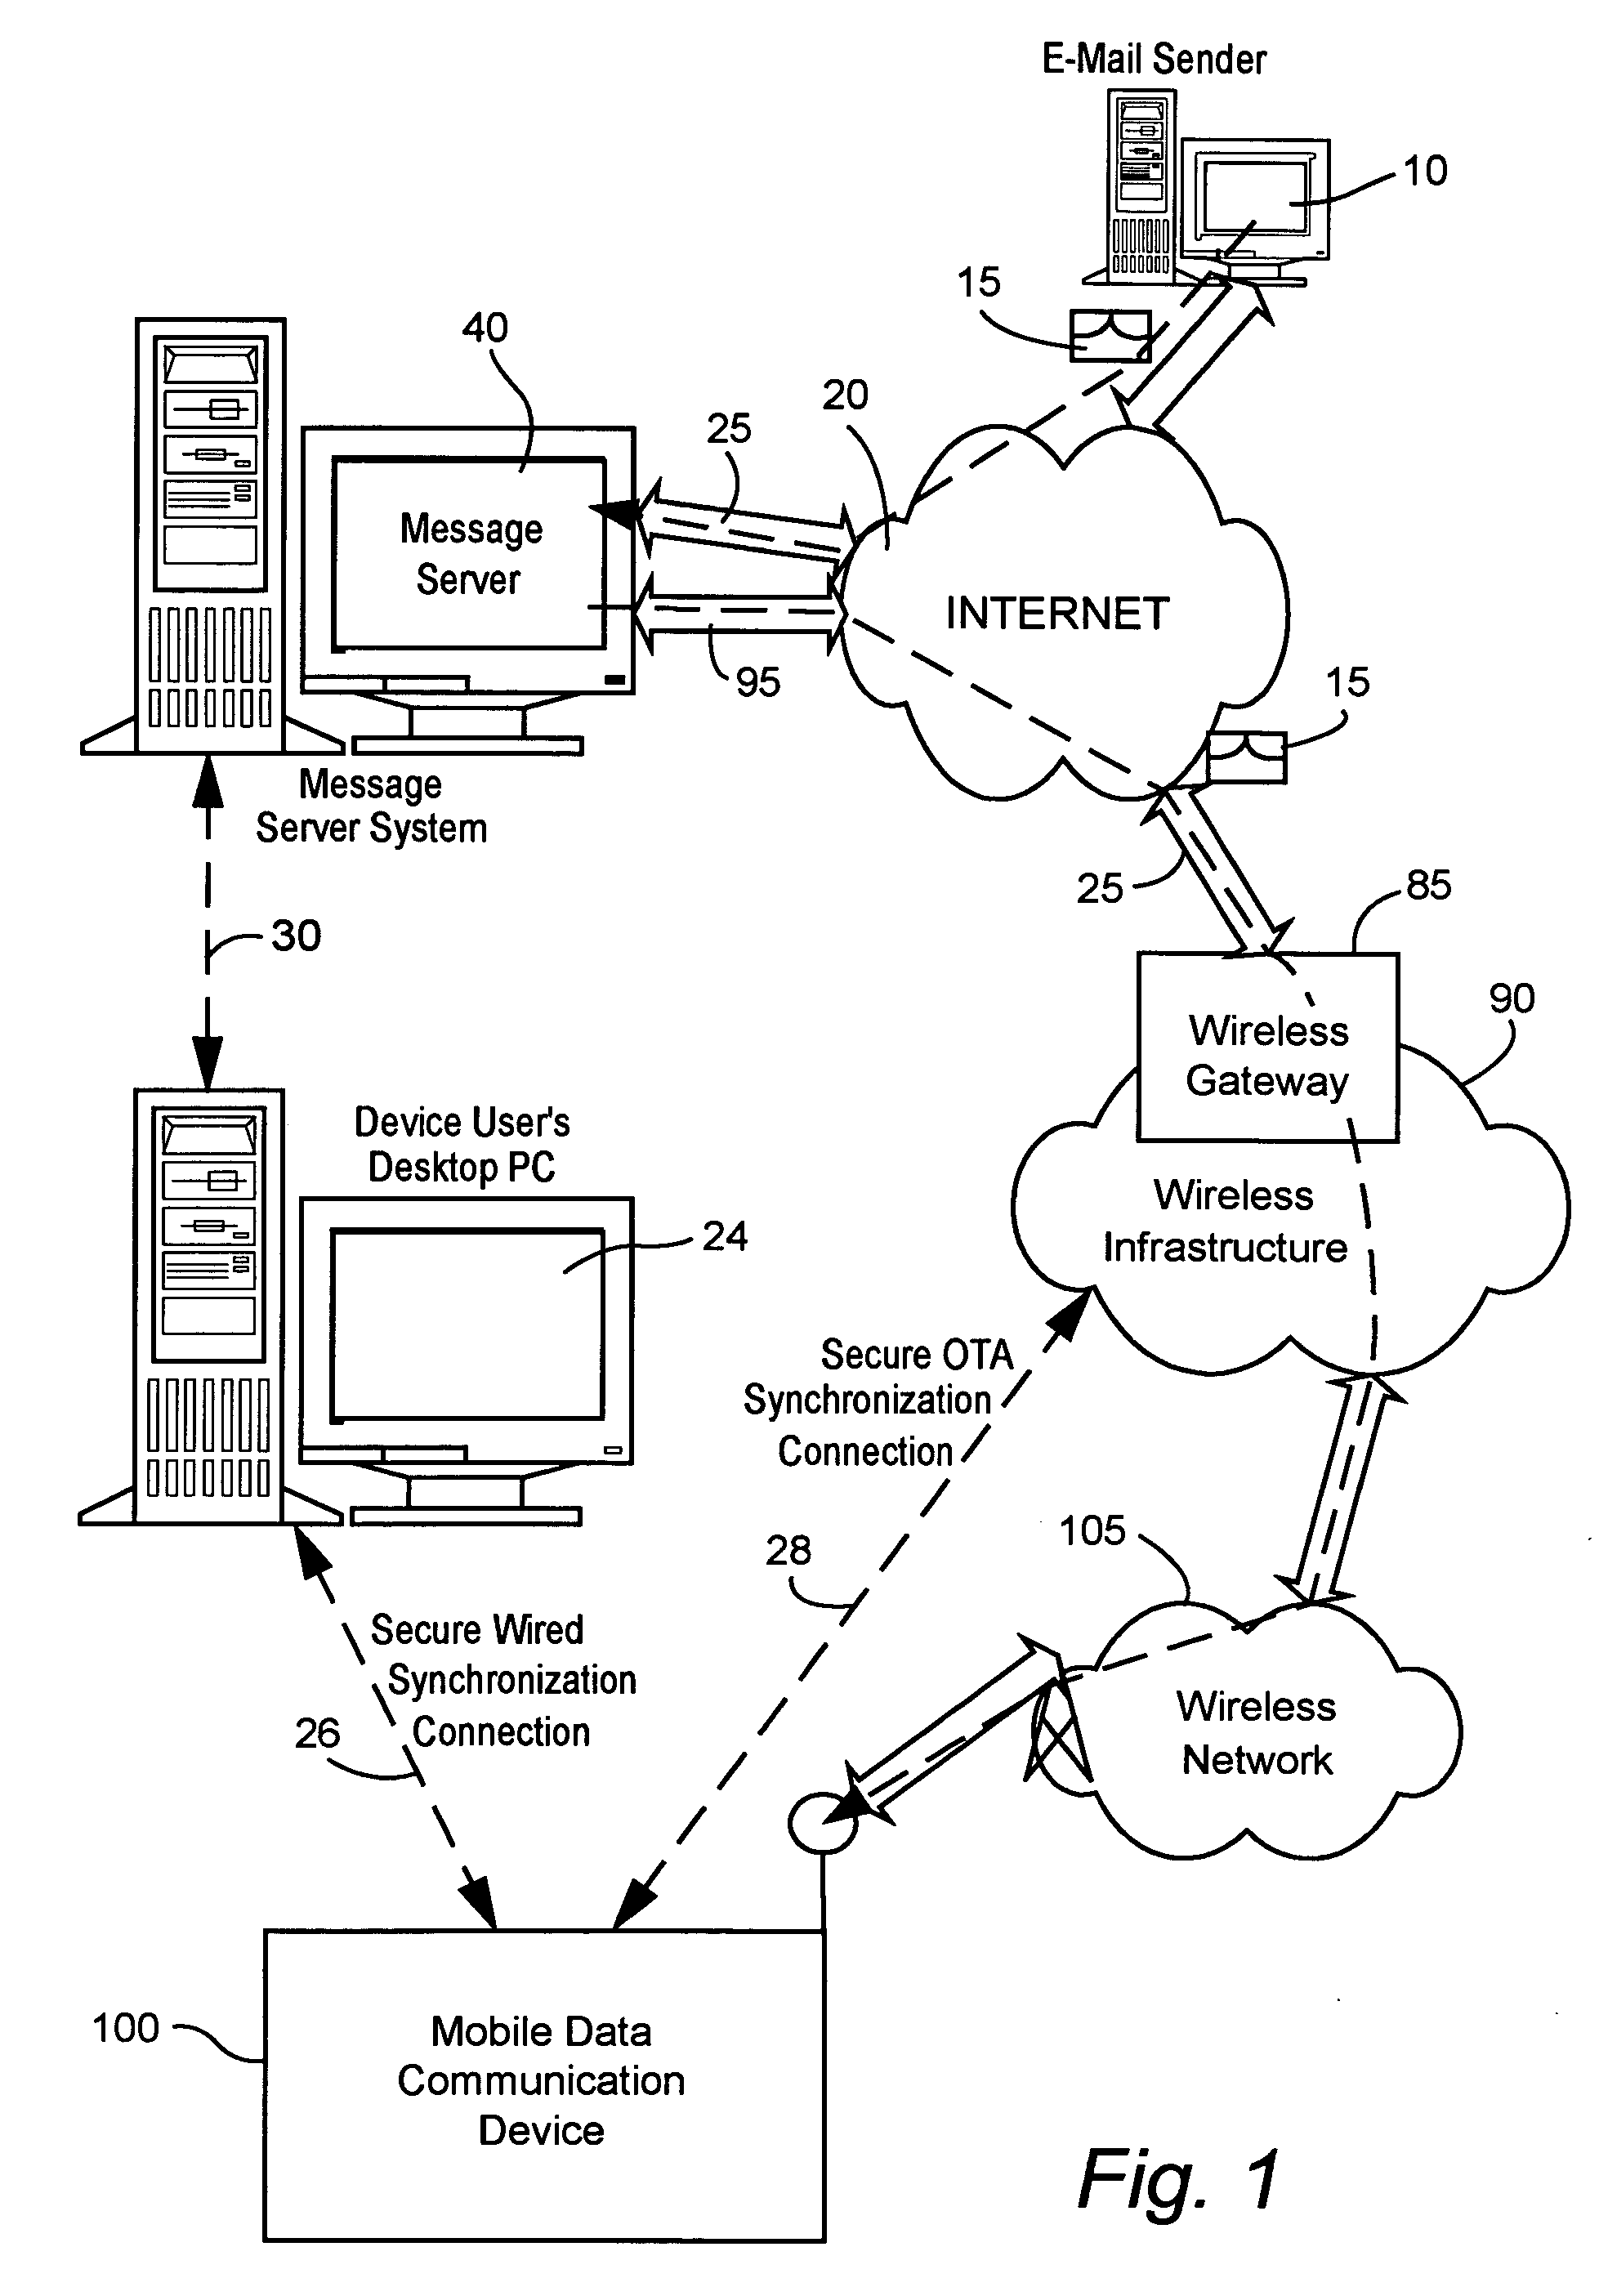 Method and apparatus for providing intelligent error messaging